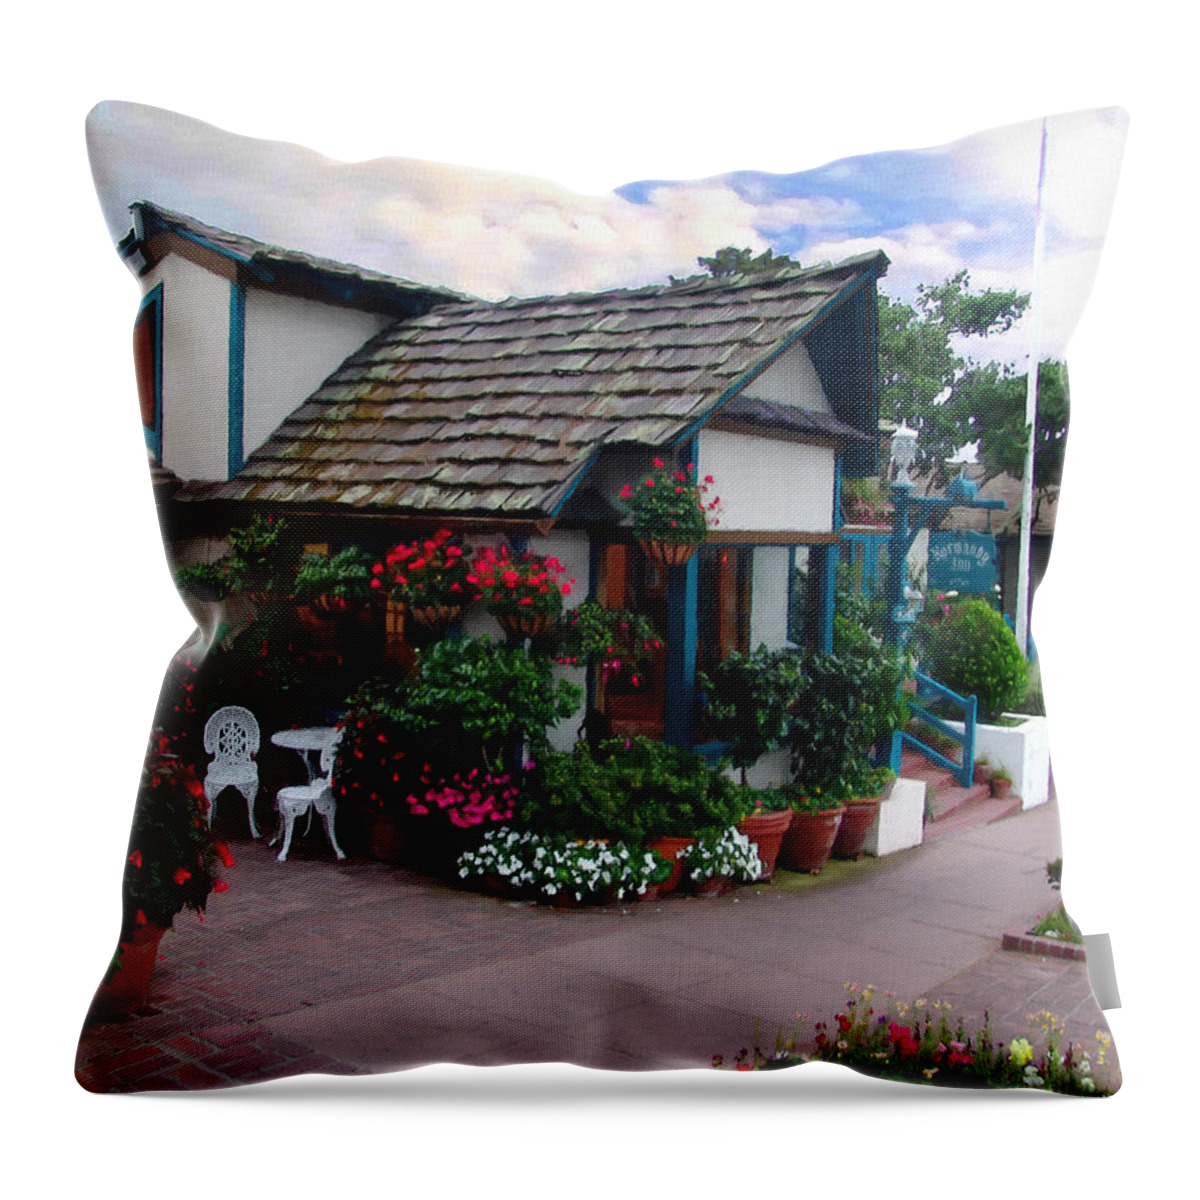 Normandy Inn Throw Pillow featuring the photograph Normandy Inn - Carmel California by Glenn McCarthy Art and Photography